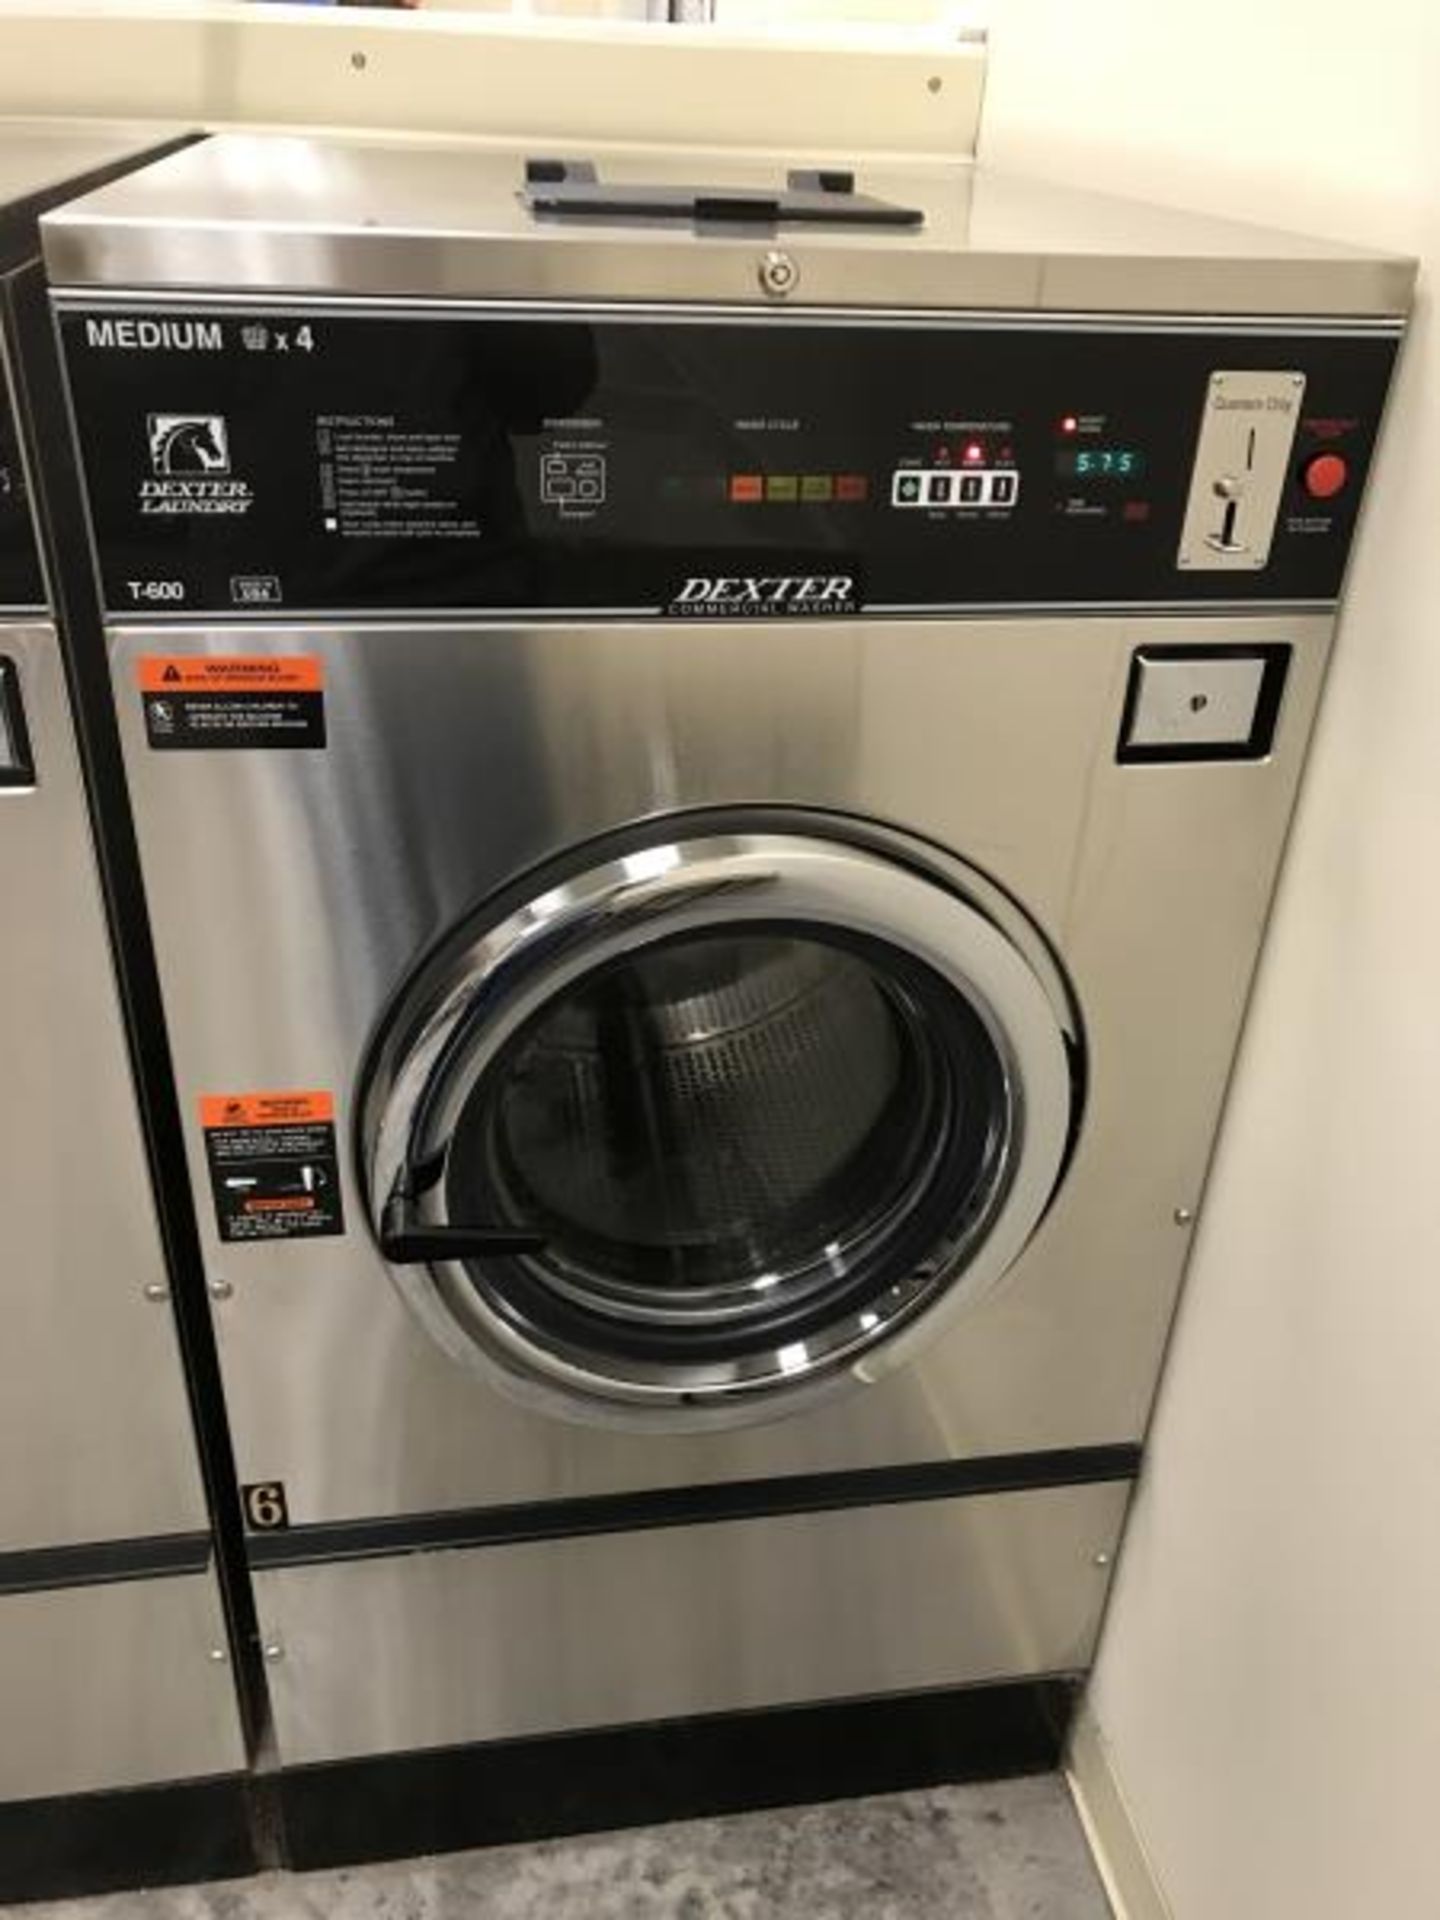 Dexter Commercial Washing Machine, Medium x 4, 40 Lbs., Model: T-600 / WCAD40KCX-12CN, SN: 531835